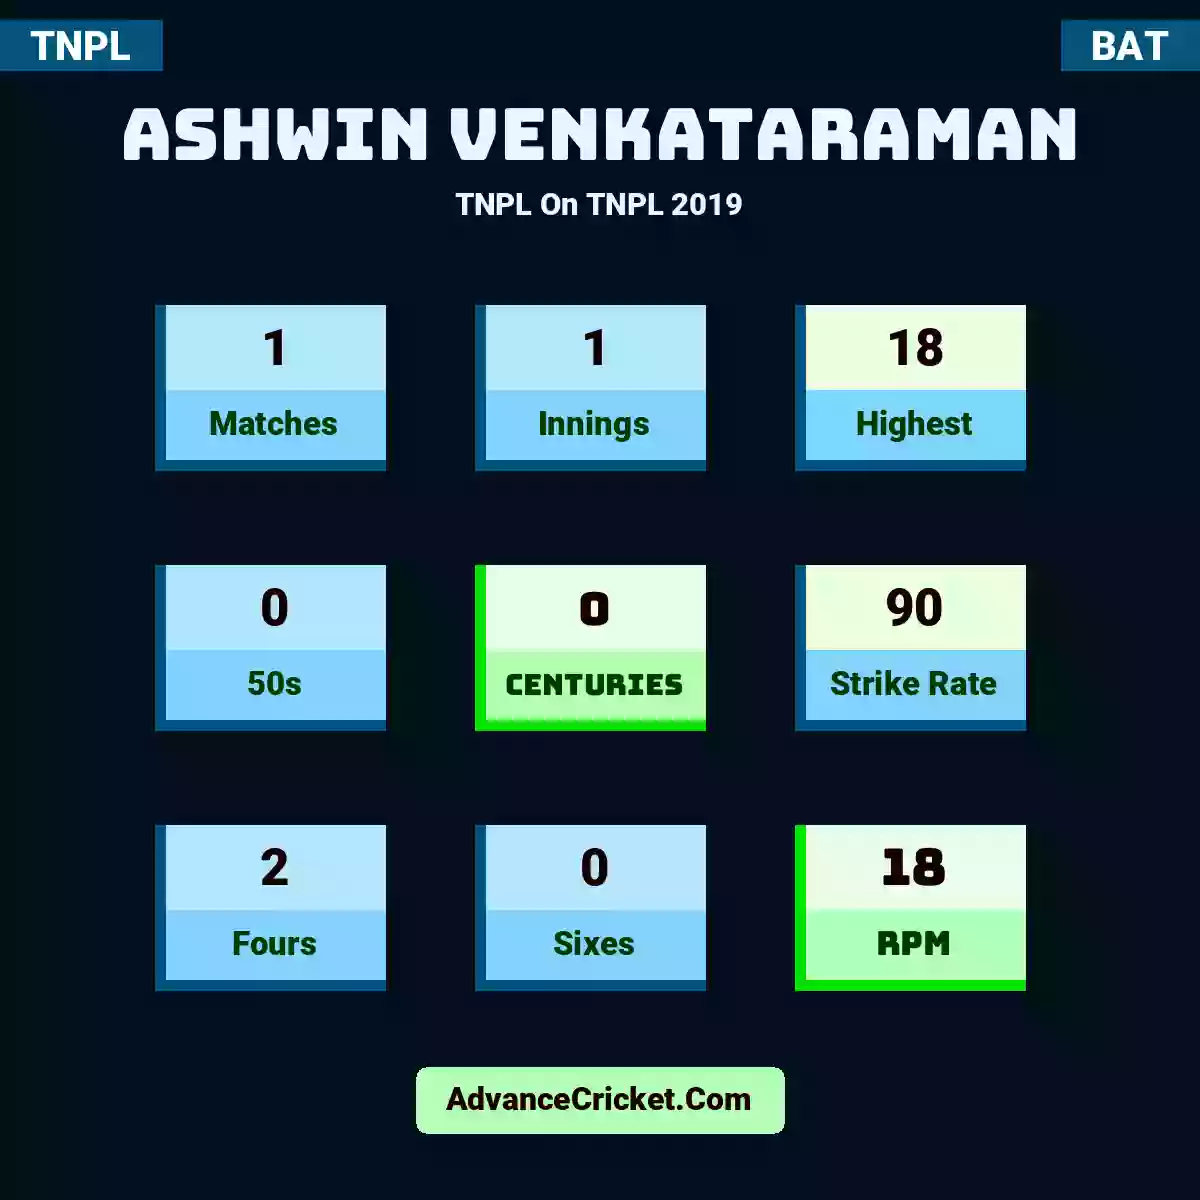 Ashwin Venkataraman TNPL  On TNPL 2019, Ashwin Venkataraman played 1 matches, scored 18 runs as highest, 0 half-centuries, and 0 centuries, with a strike rate of 90. A.Venkataraman hit 2 fours and 0 sixes, with an RPM of 18.